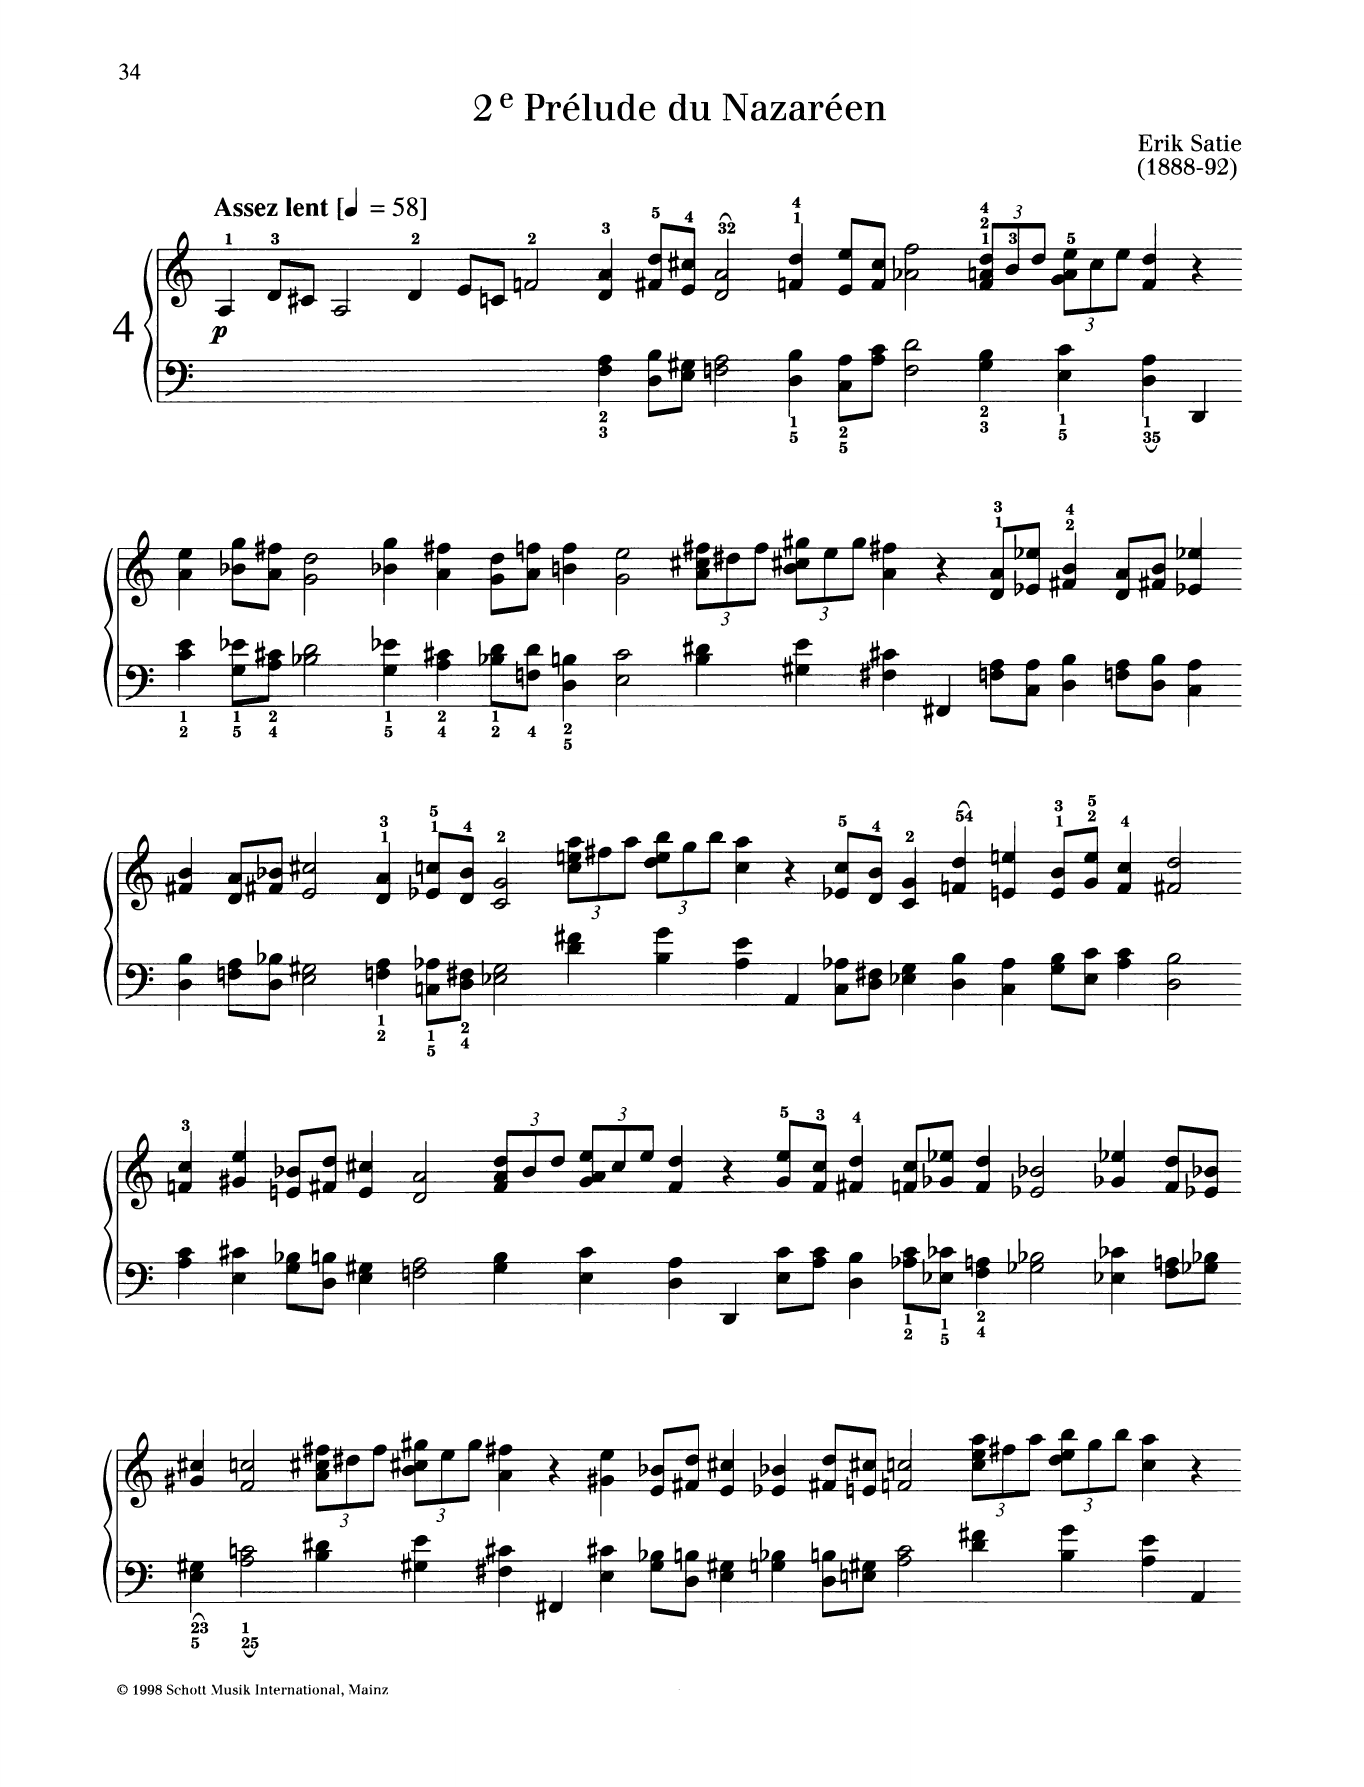 Download Erik Satie 2e Prelude du Nazareen Sheet Music